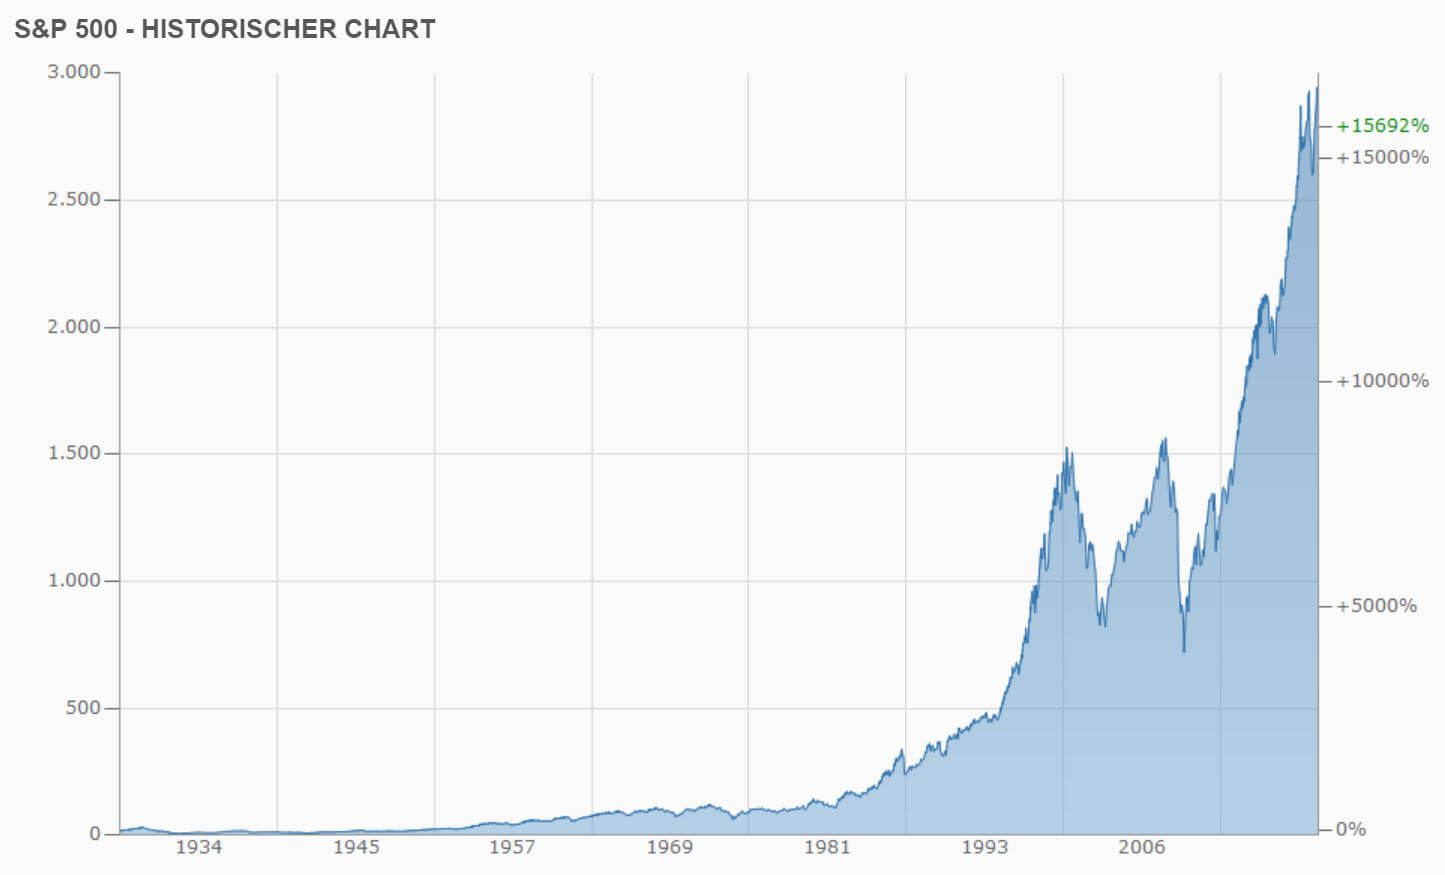 S&P 500 Historischer Chart